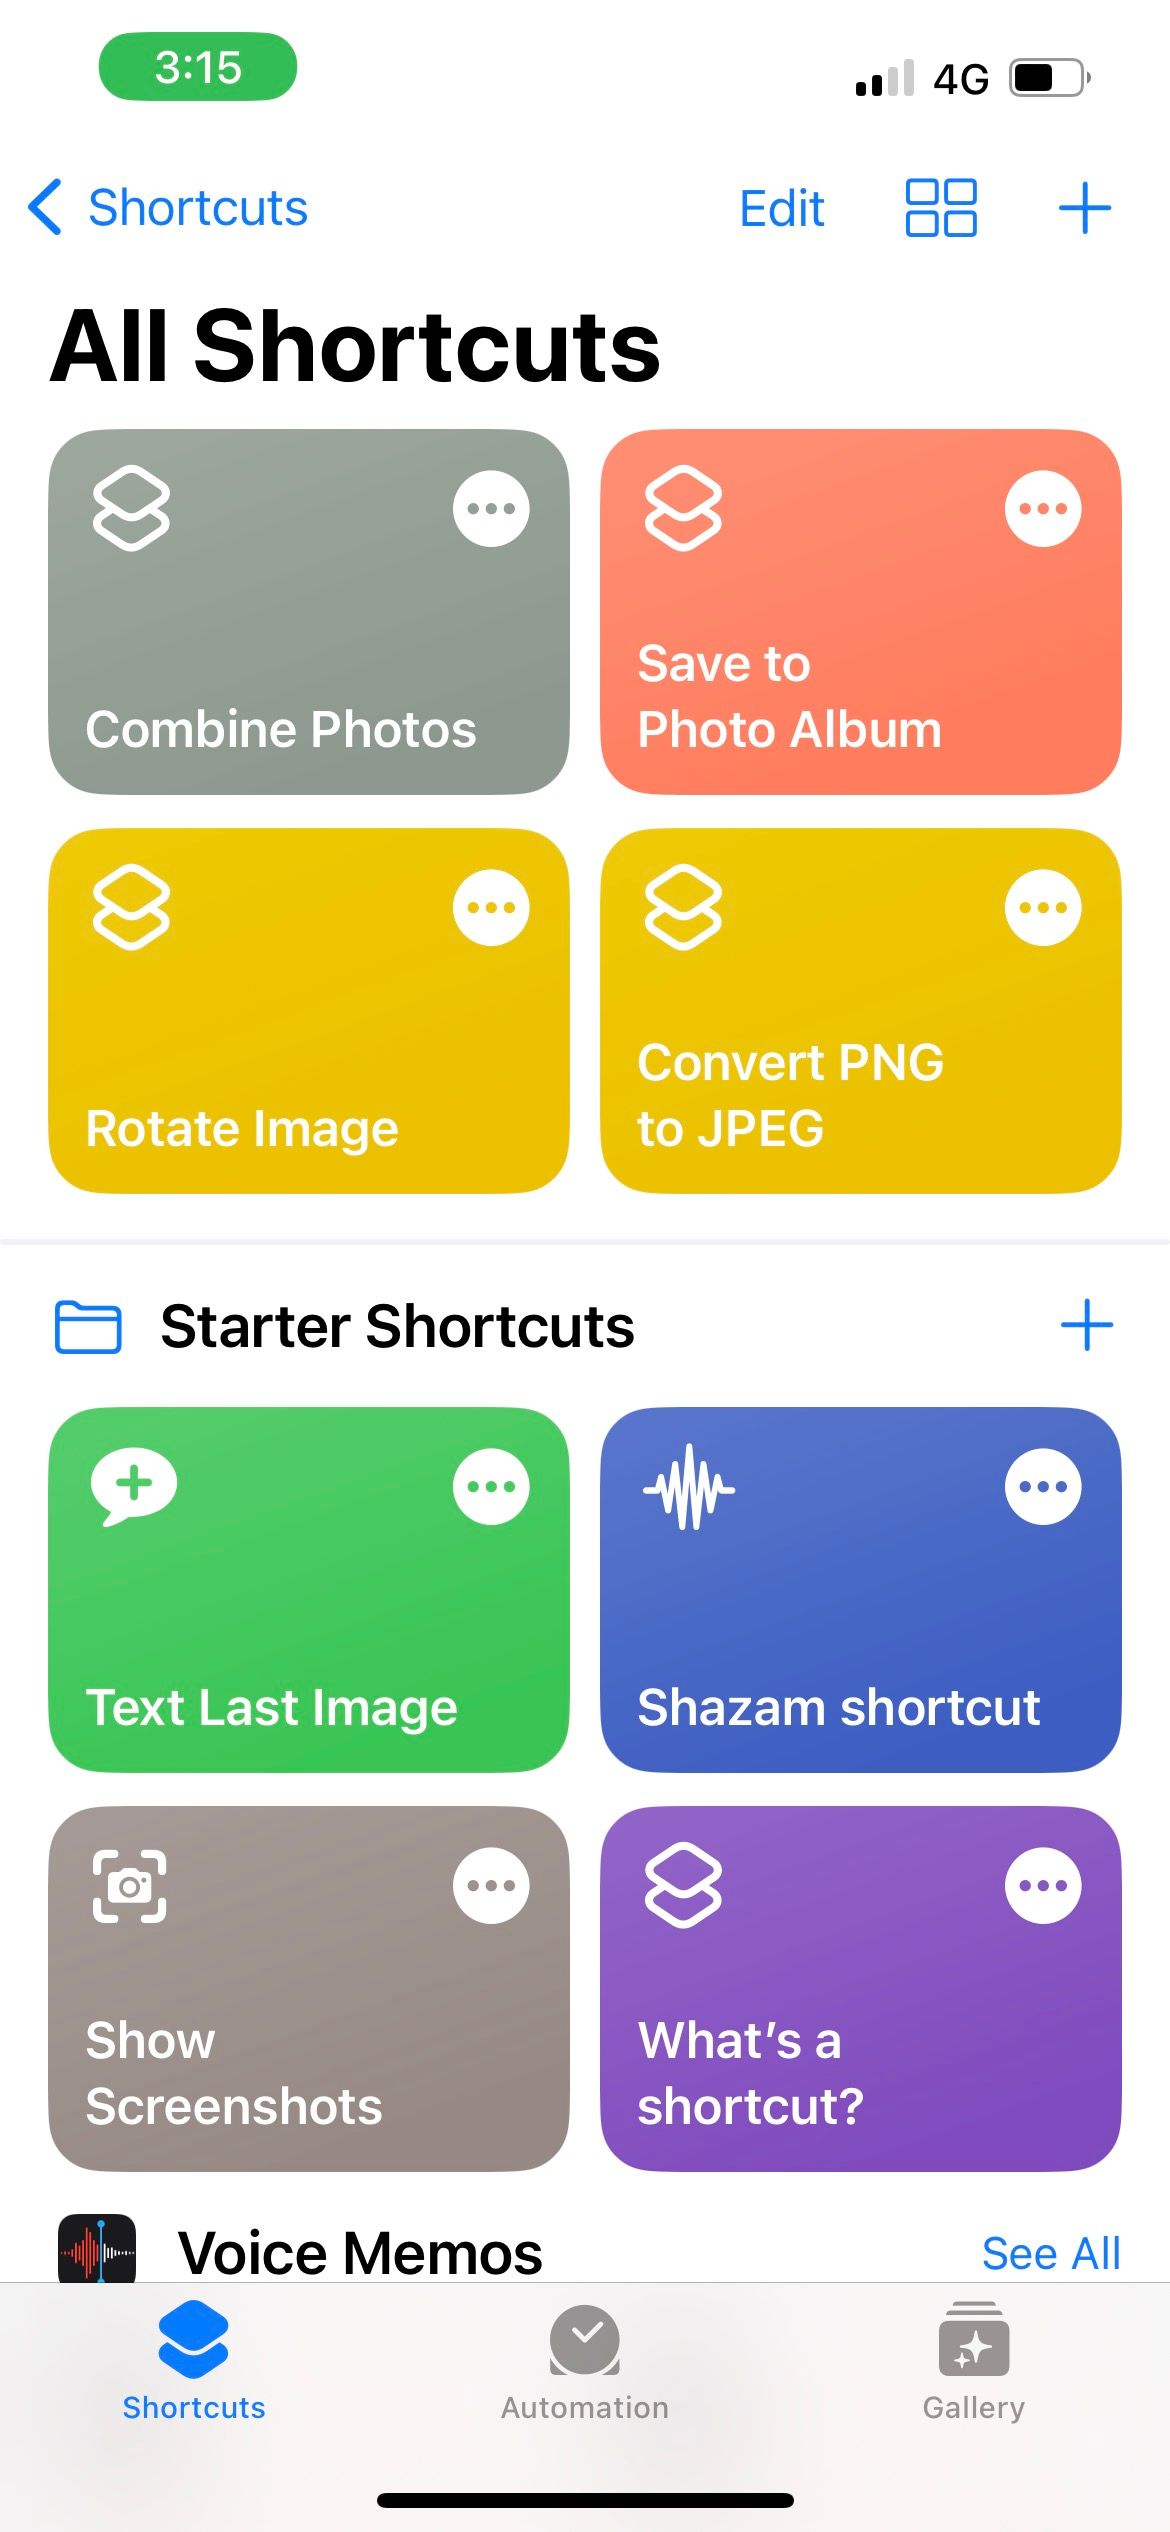 iphone shortcuts in shortcuts app